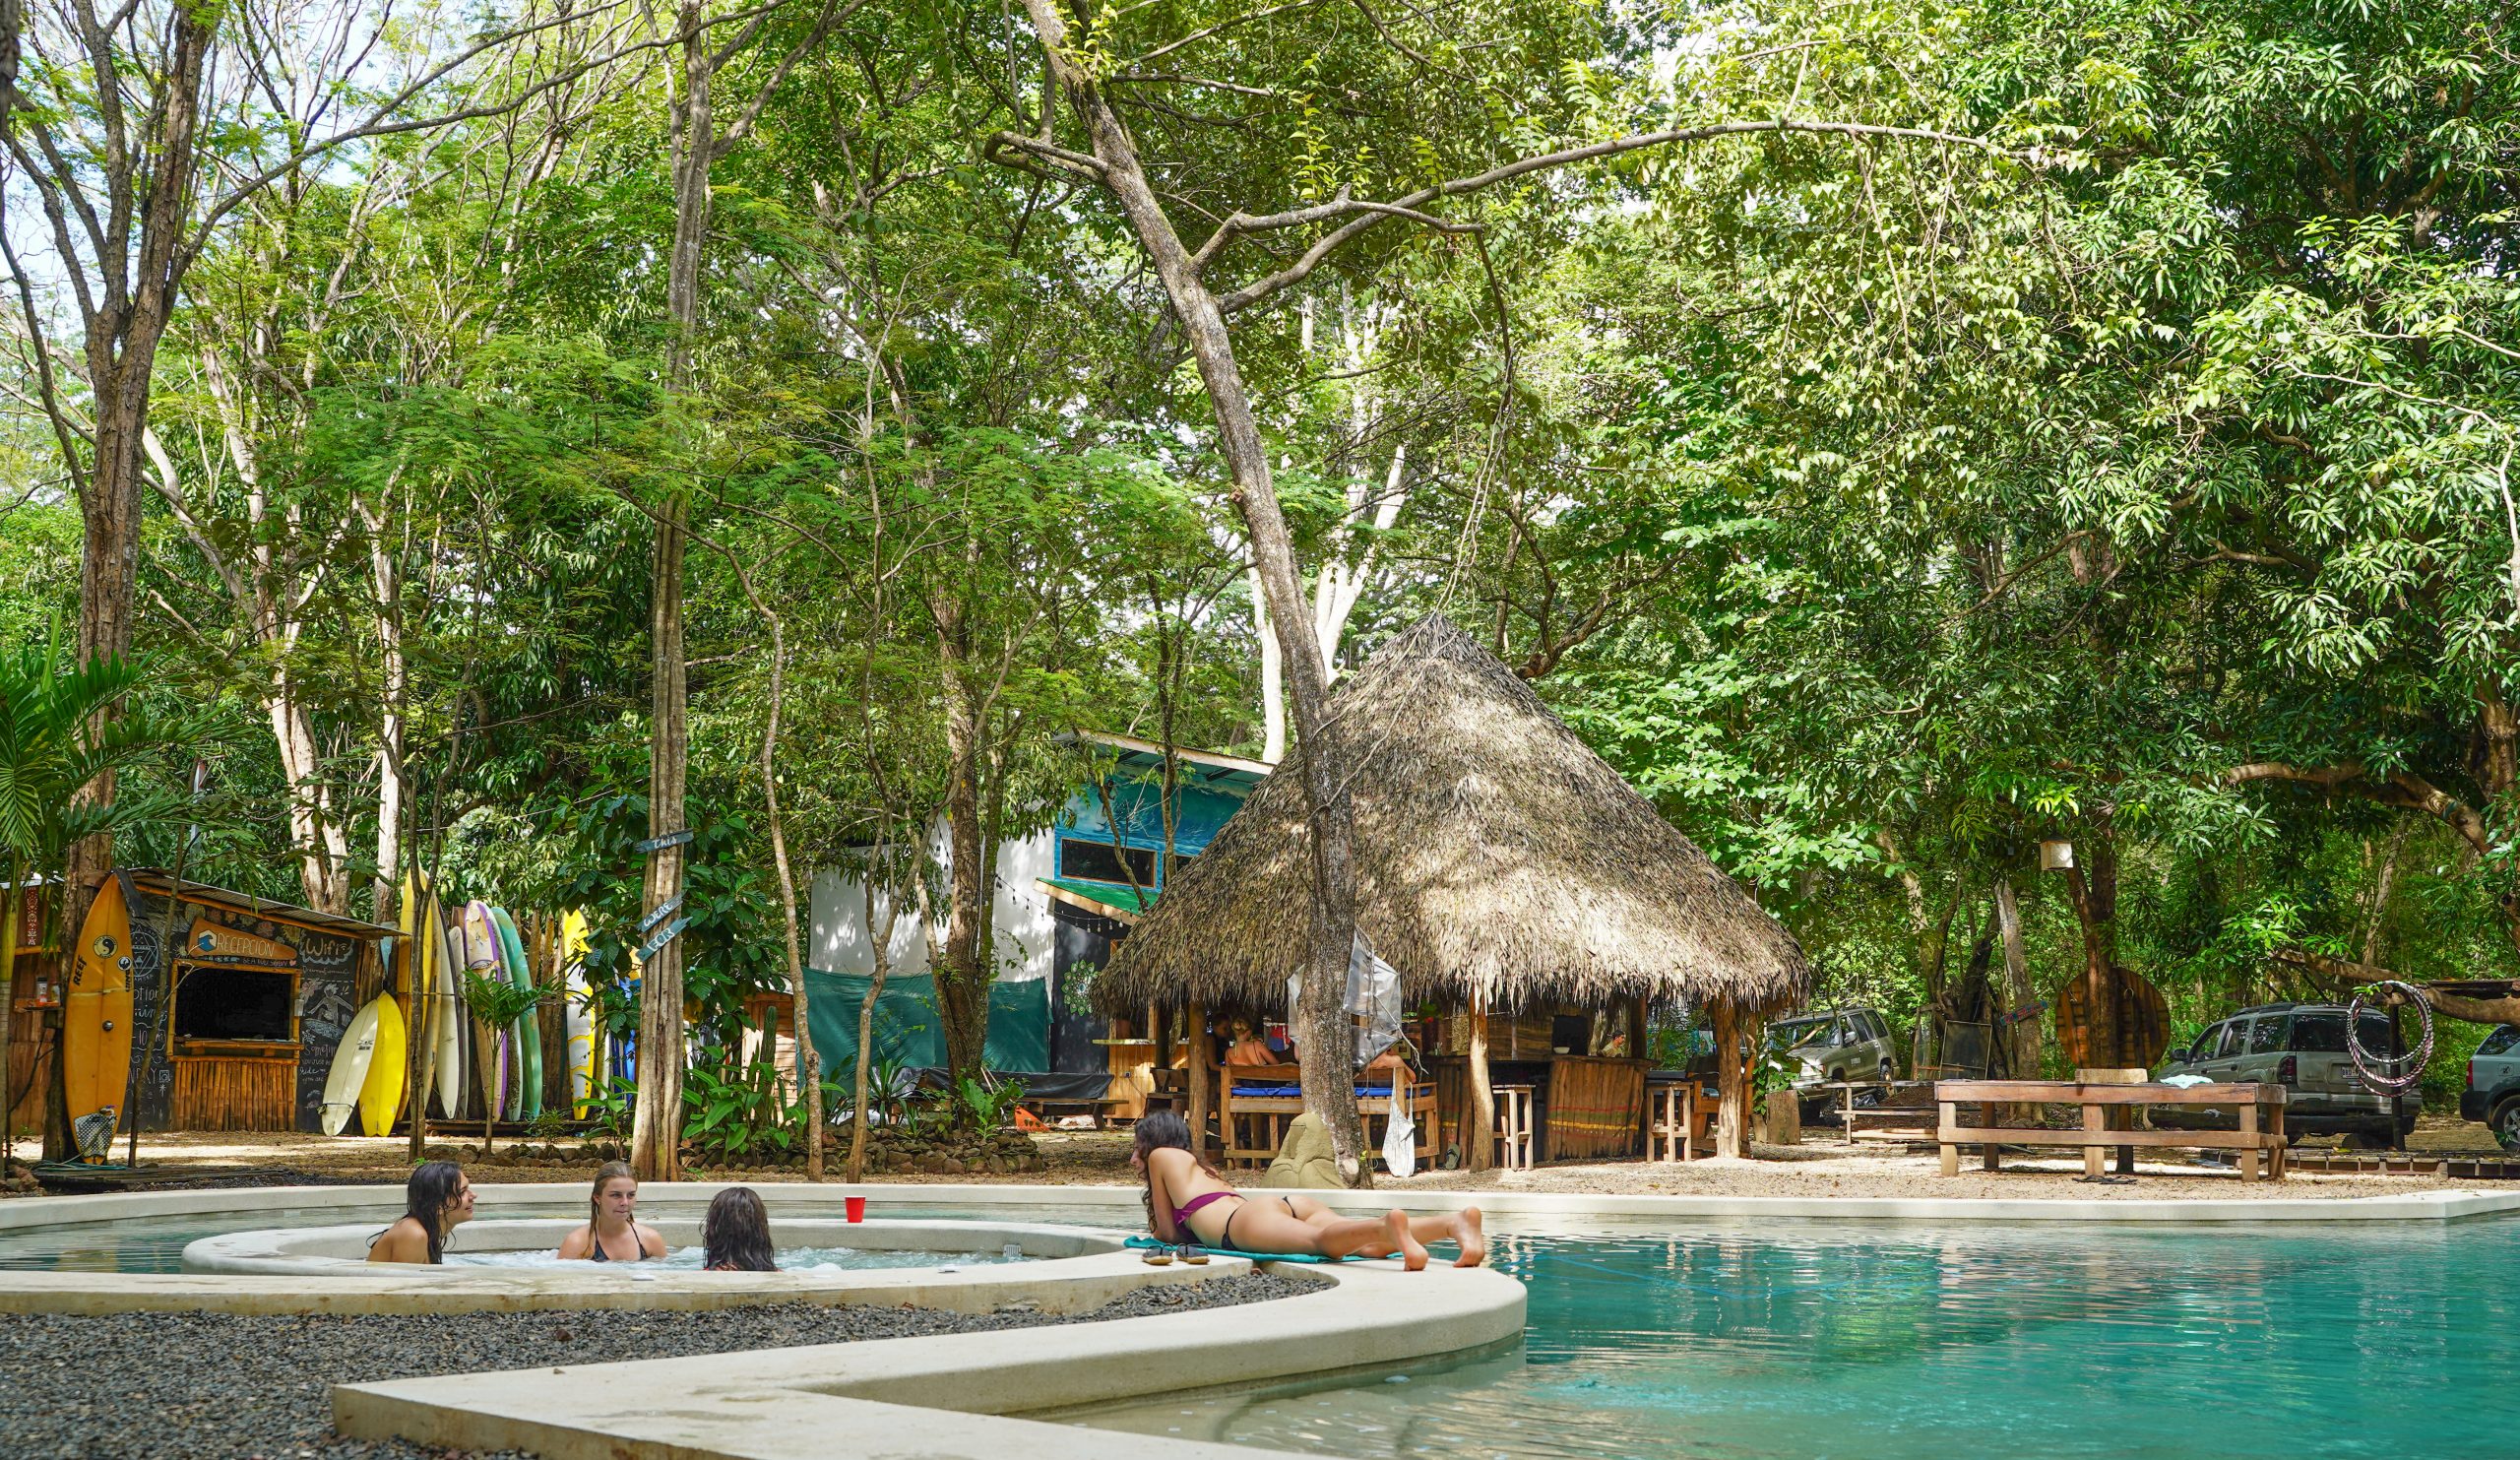 Featured image for “Dreamsea Costa Rica: Where Nature Meets Adventure”